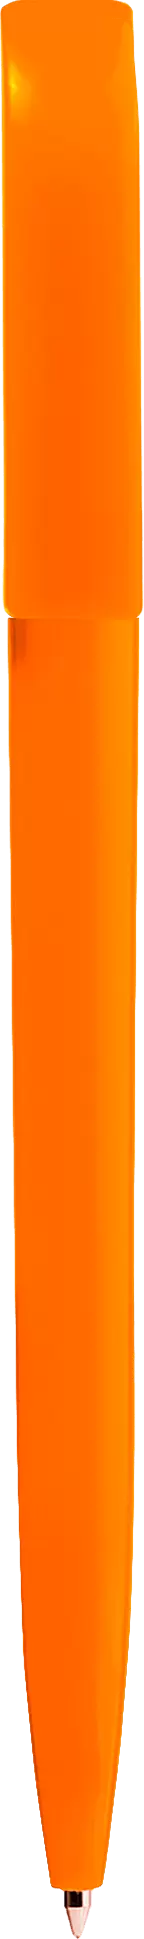 Ручка GLOBAL Оранжевая 1080.05